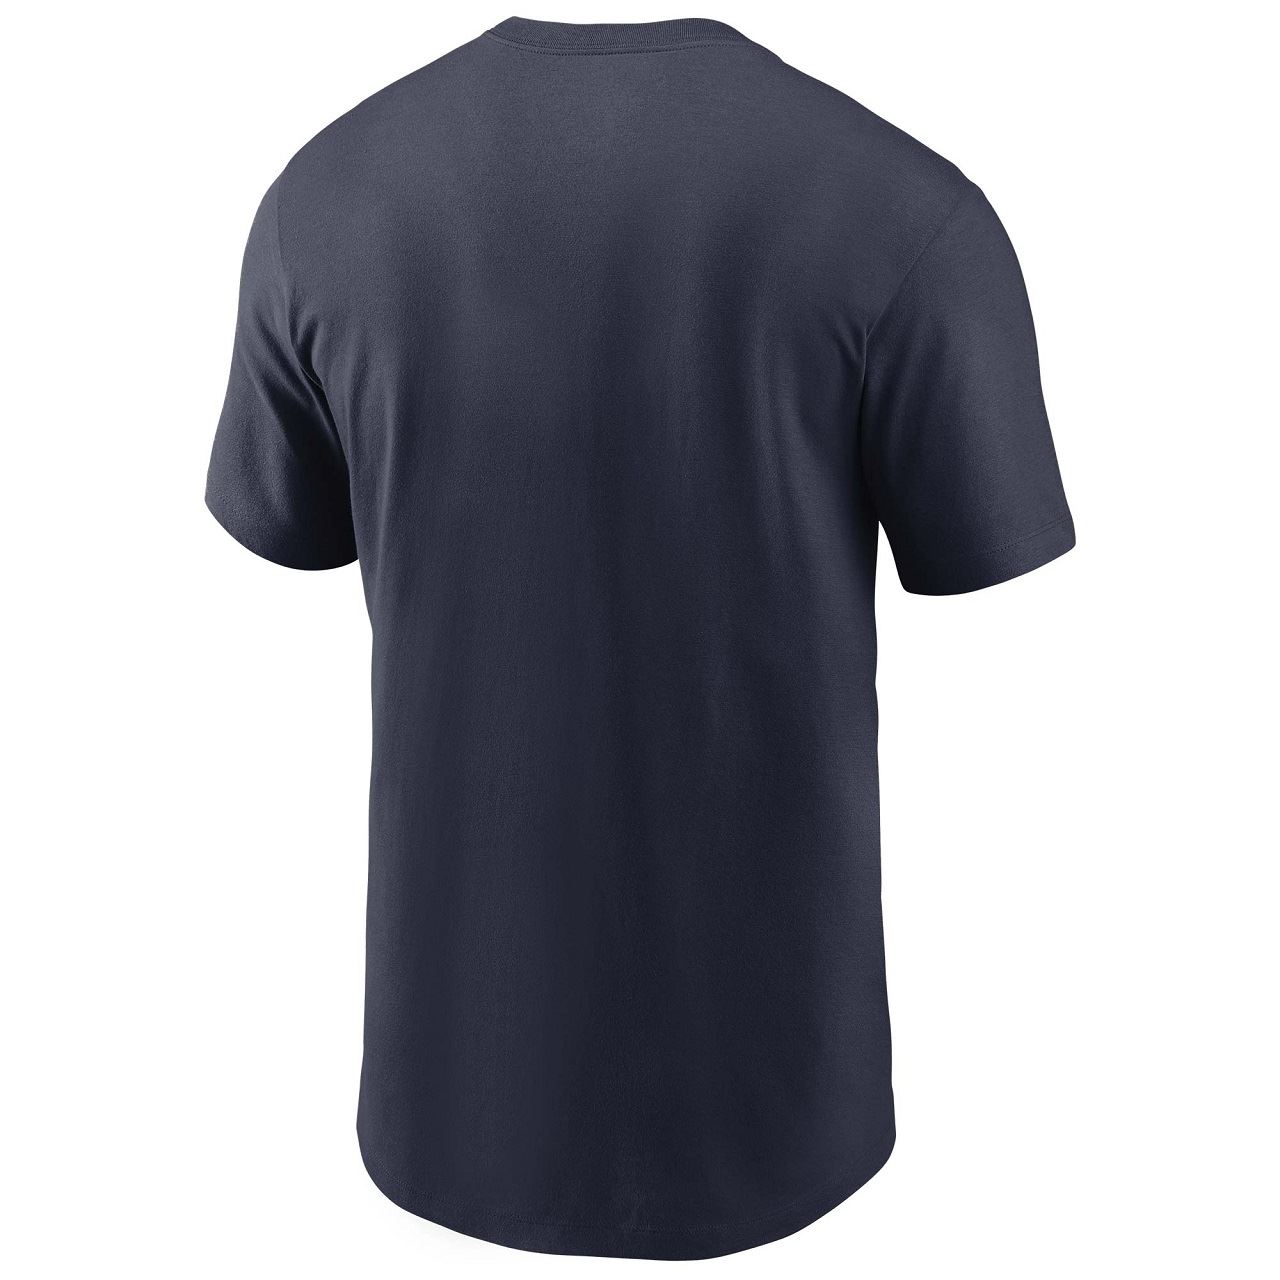 New England Patriots NFL Split Team Name Essential Tee College Navy T-Shirt Nike